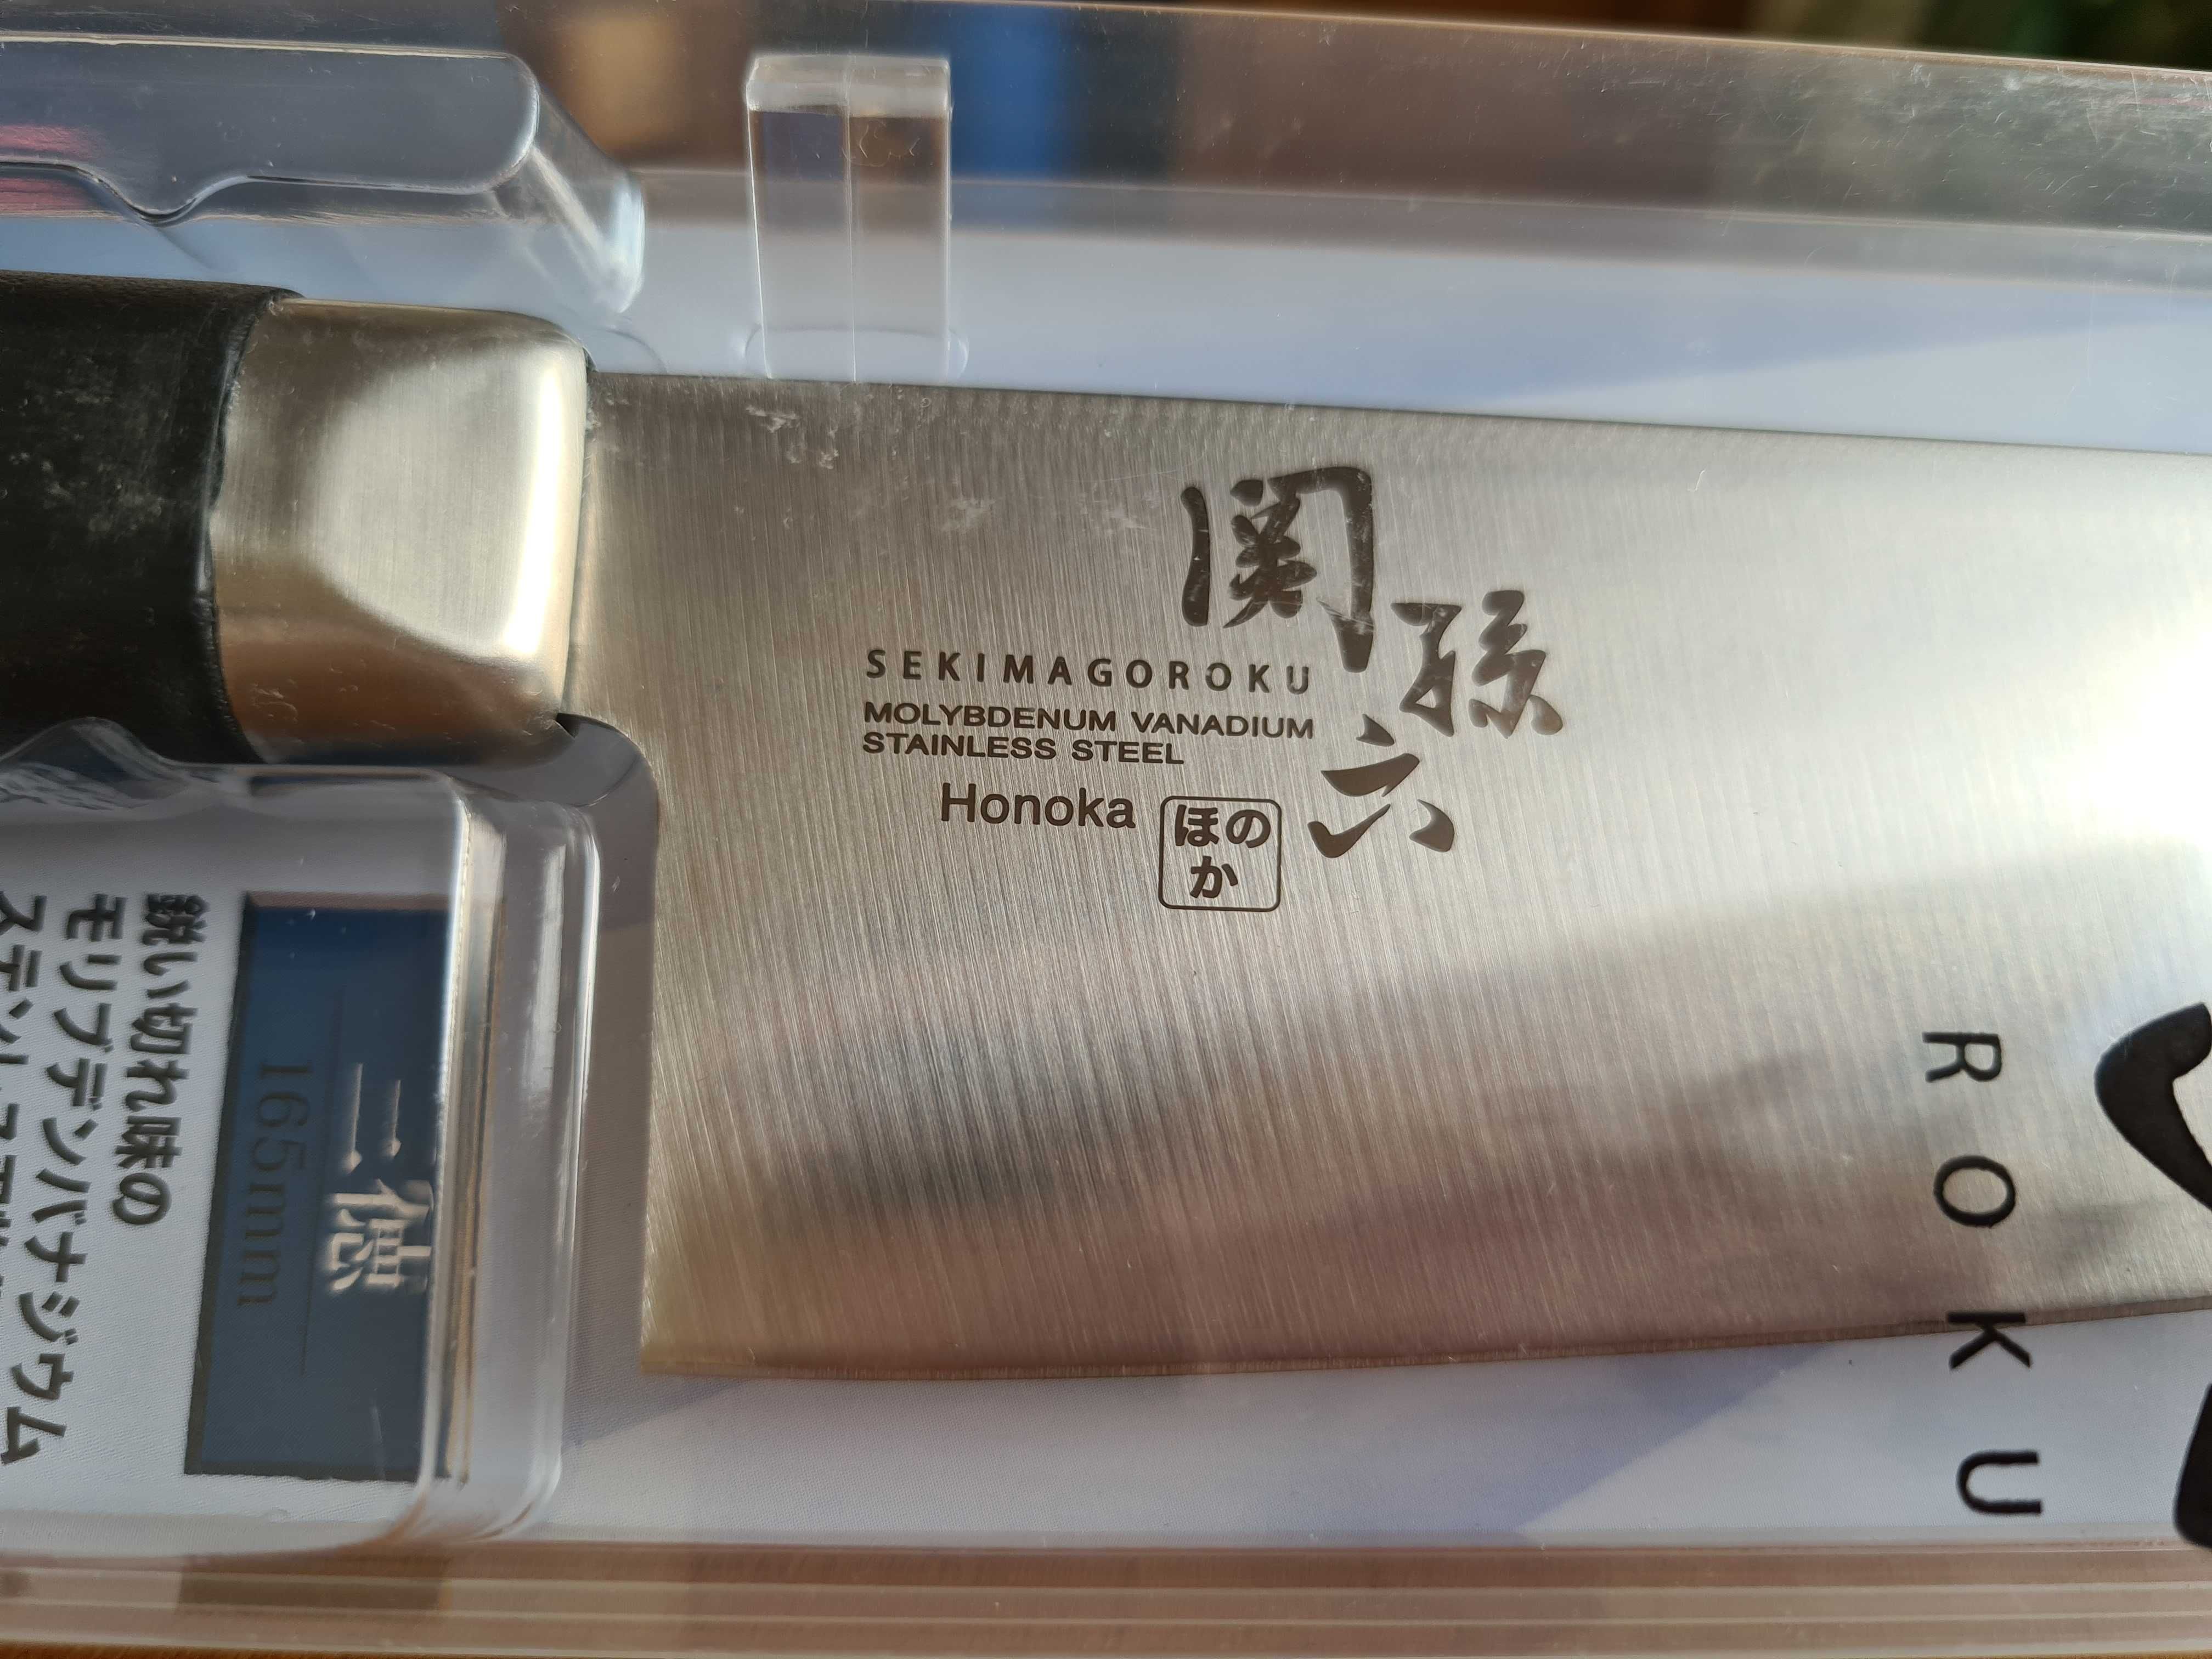 Nóż Kai Seki Mago Roku HONOKA 165 mm